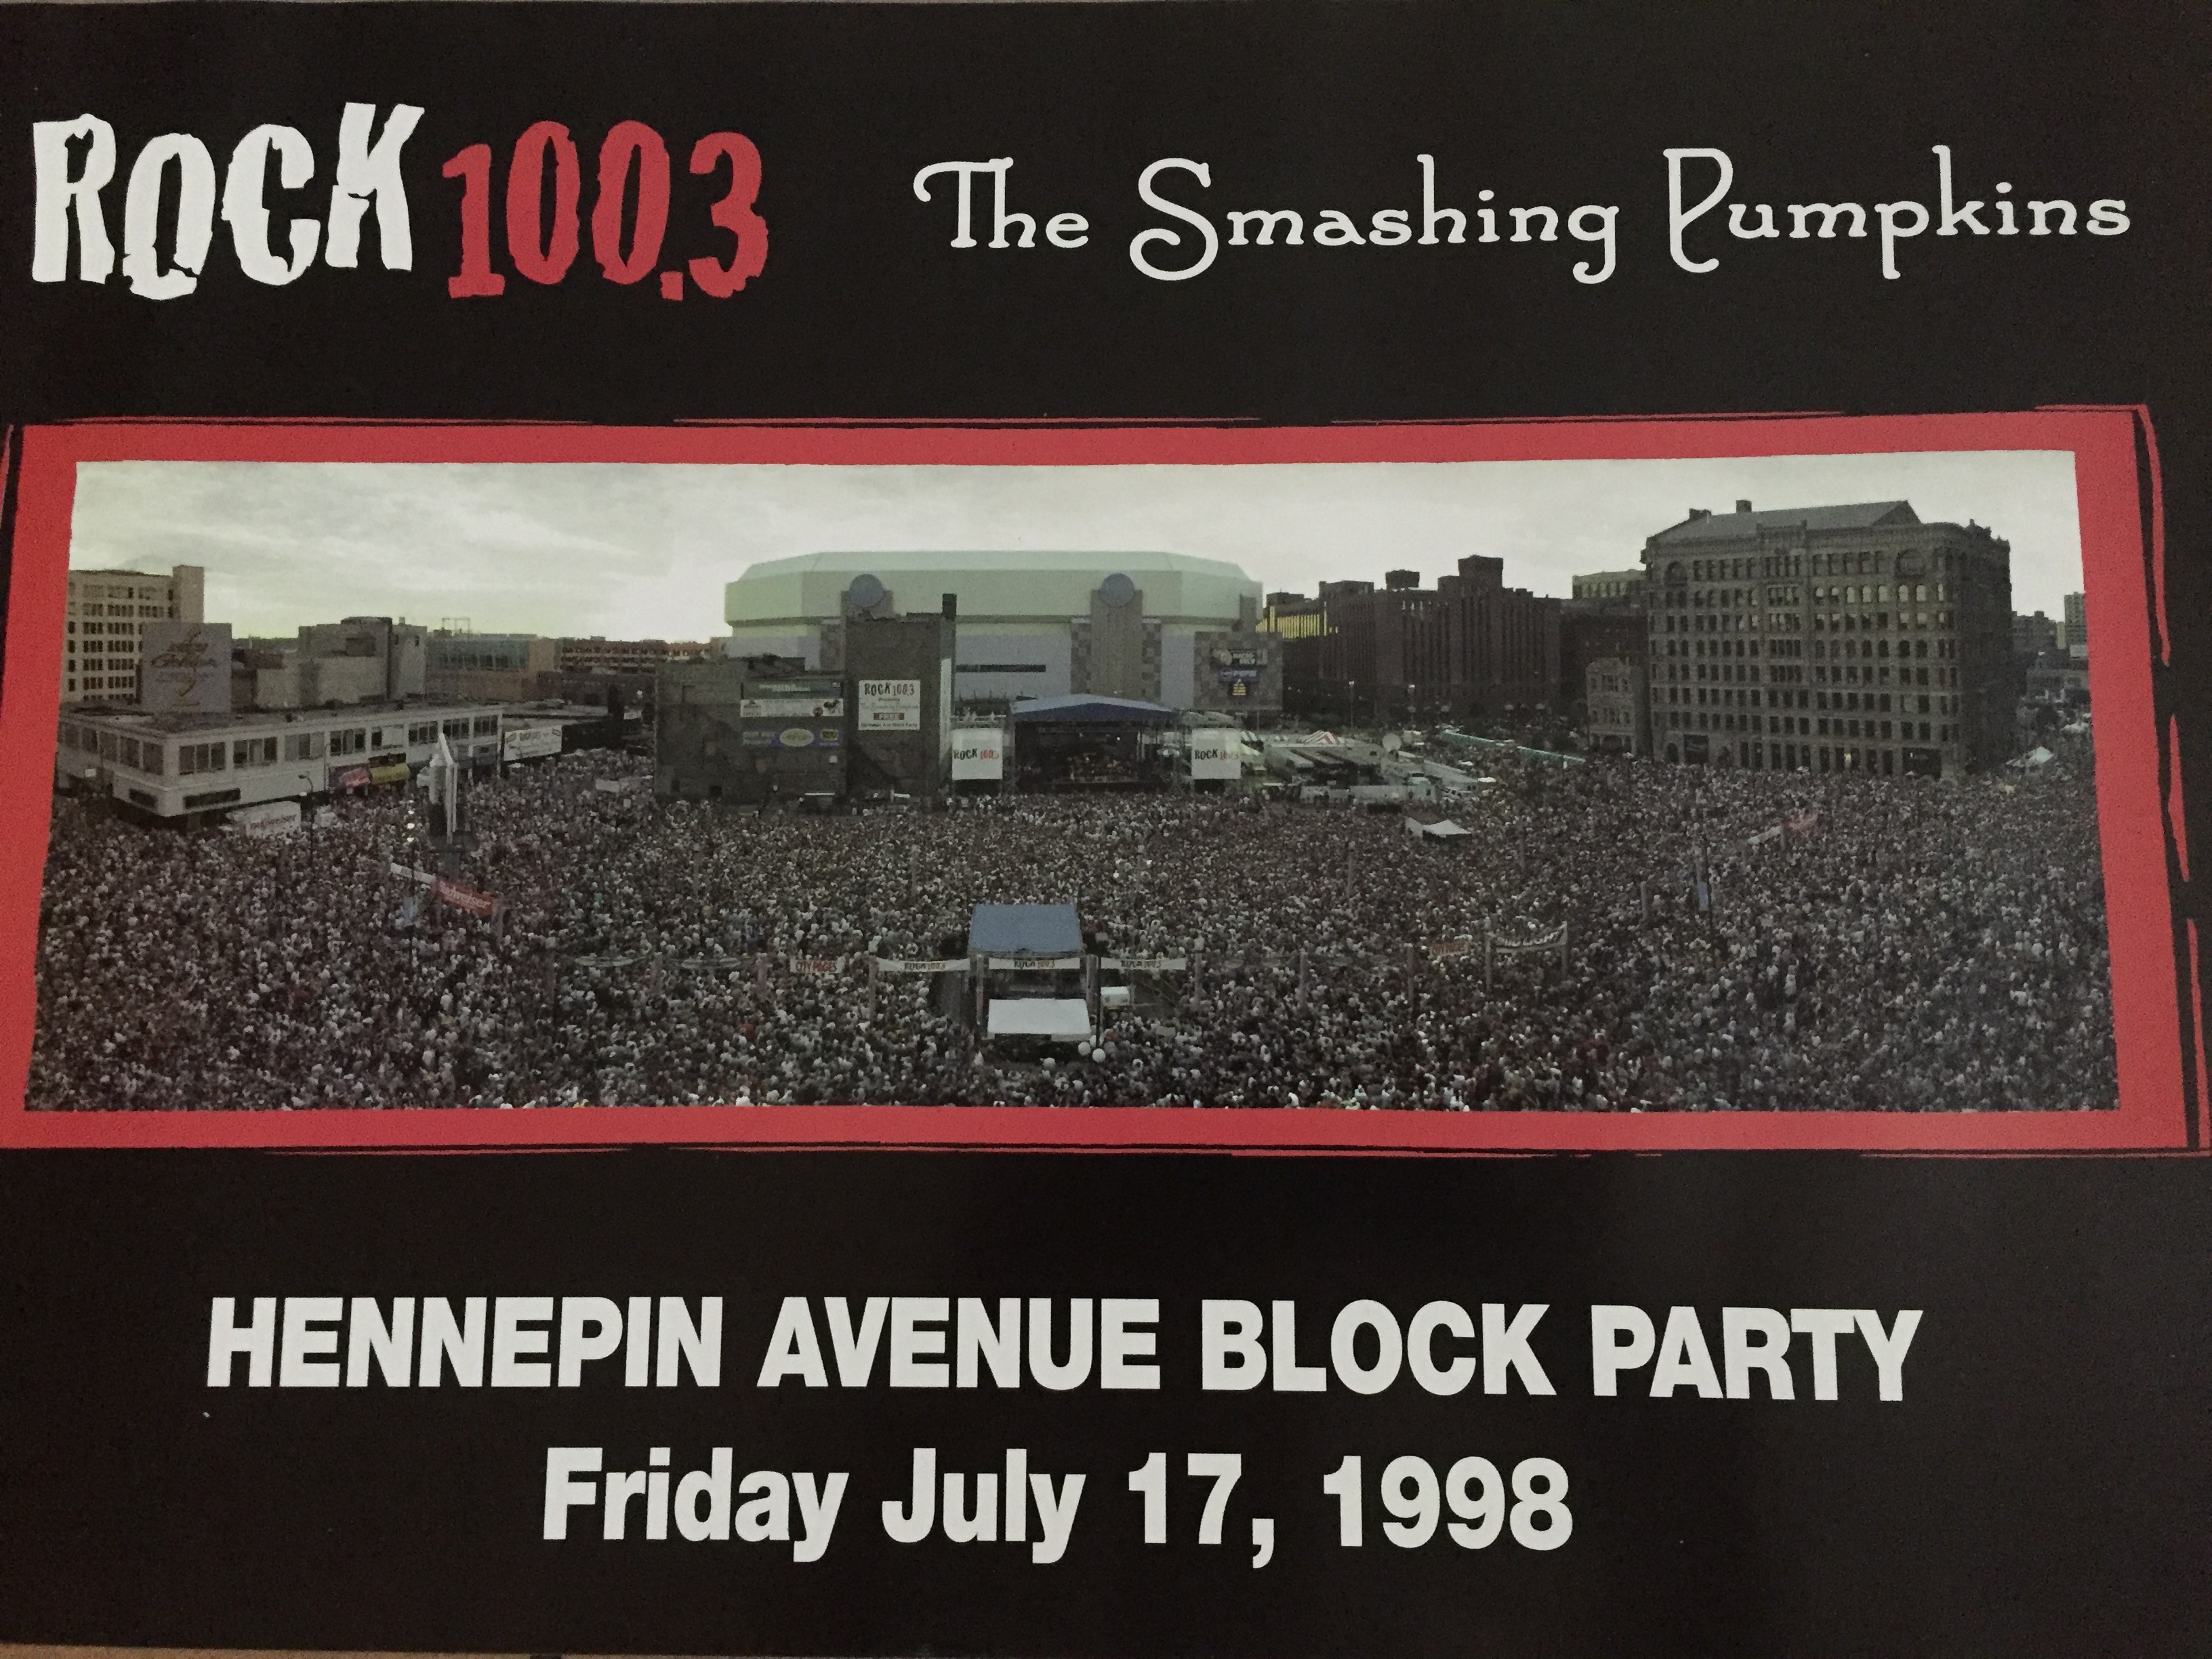 Rock 100.3 flyer for The Smashing Pumpkins, July 17, 1998